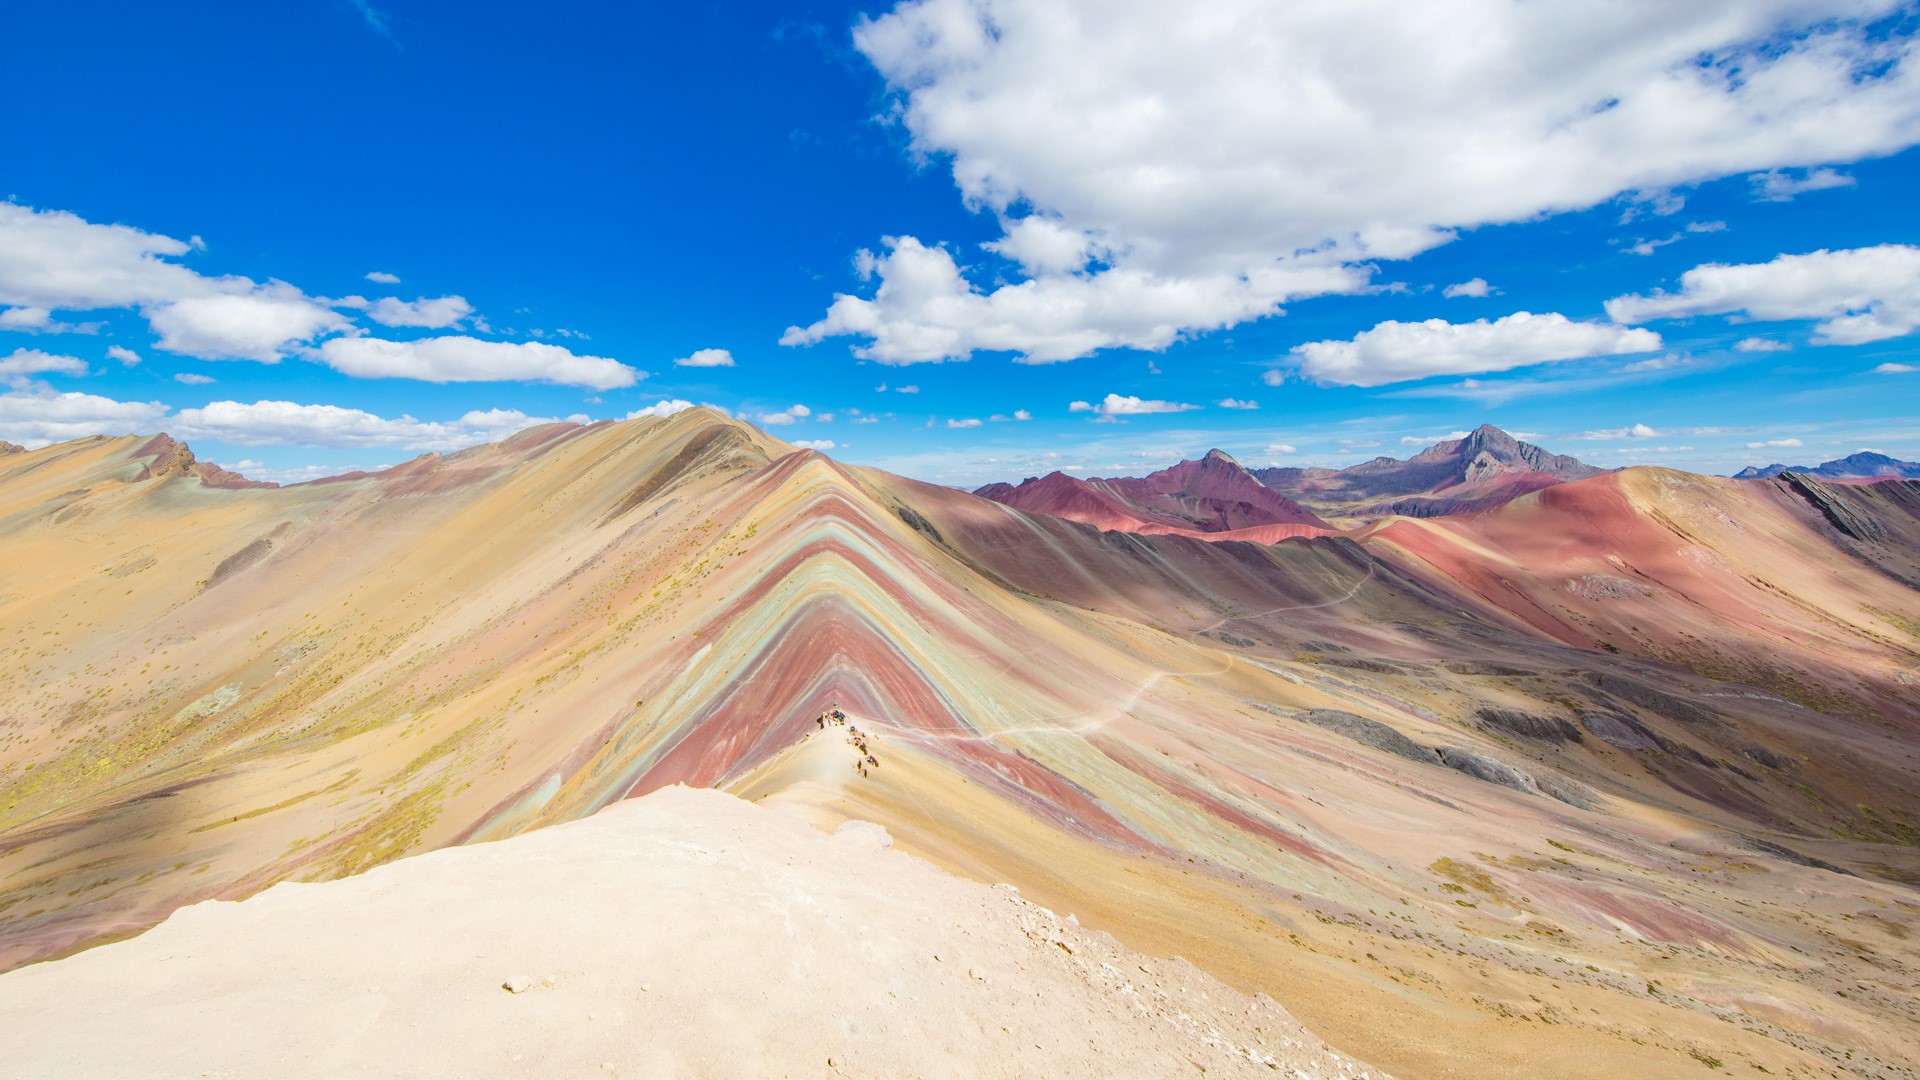 Vinicunca Rainbow Mountain, Peruvian Andes in the Cusco region, Peru ...